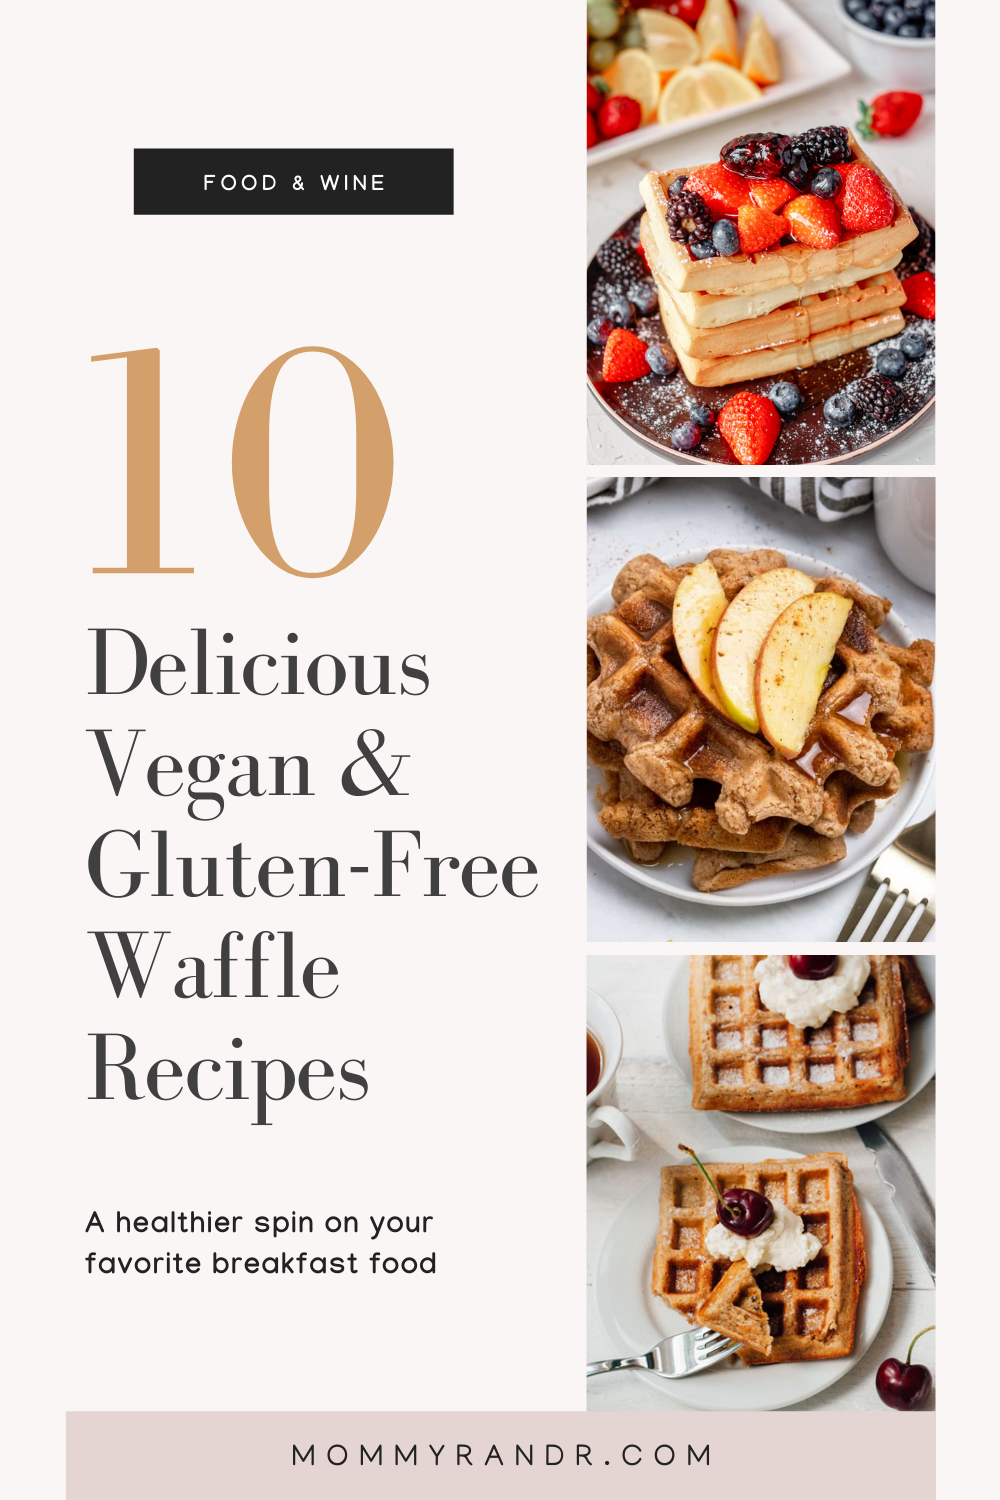 Vegan and Gluten-Free Waffle Recipes mommyrandr valerie pierre